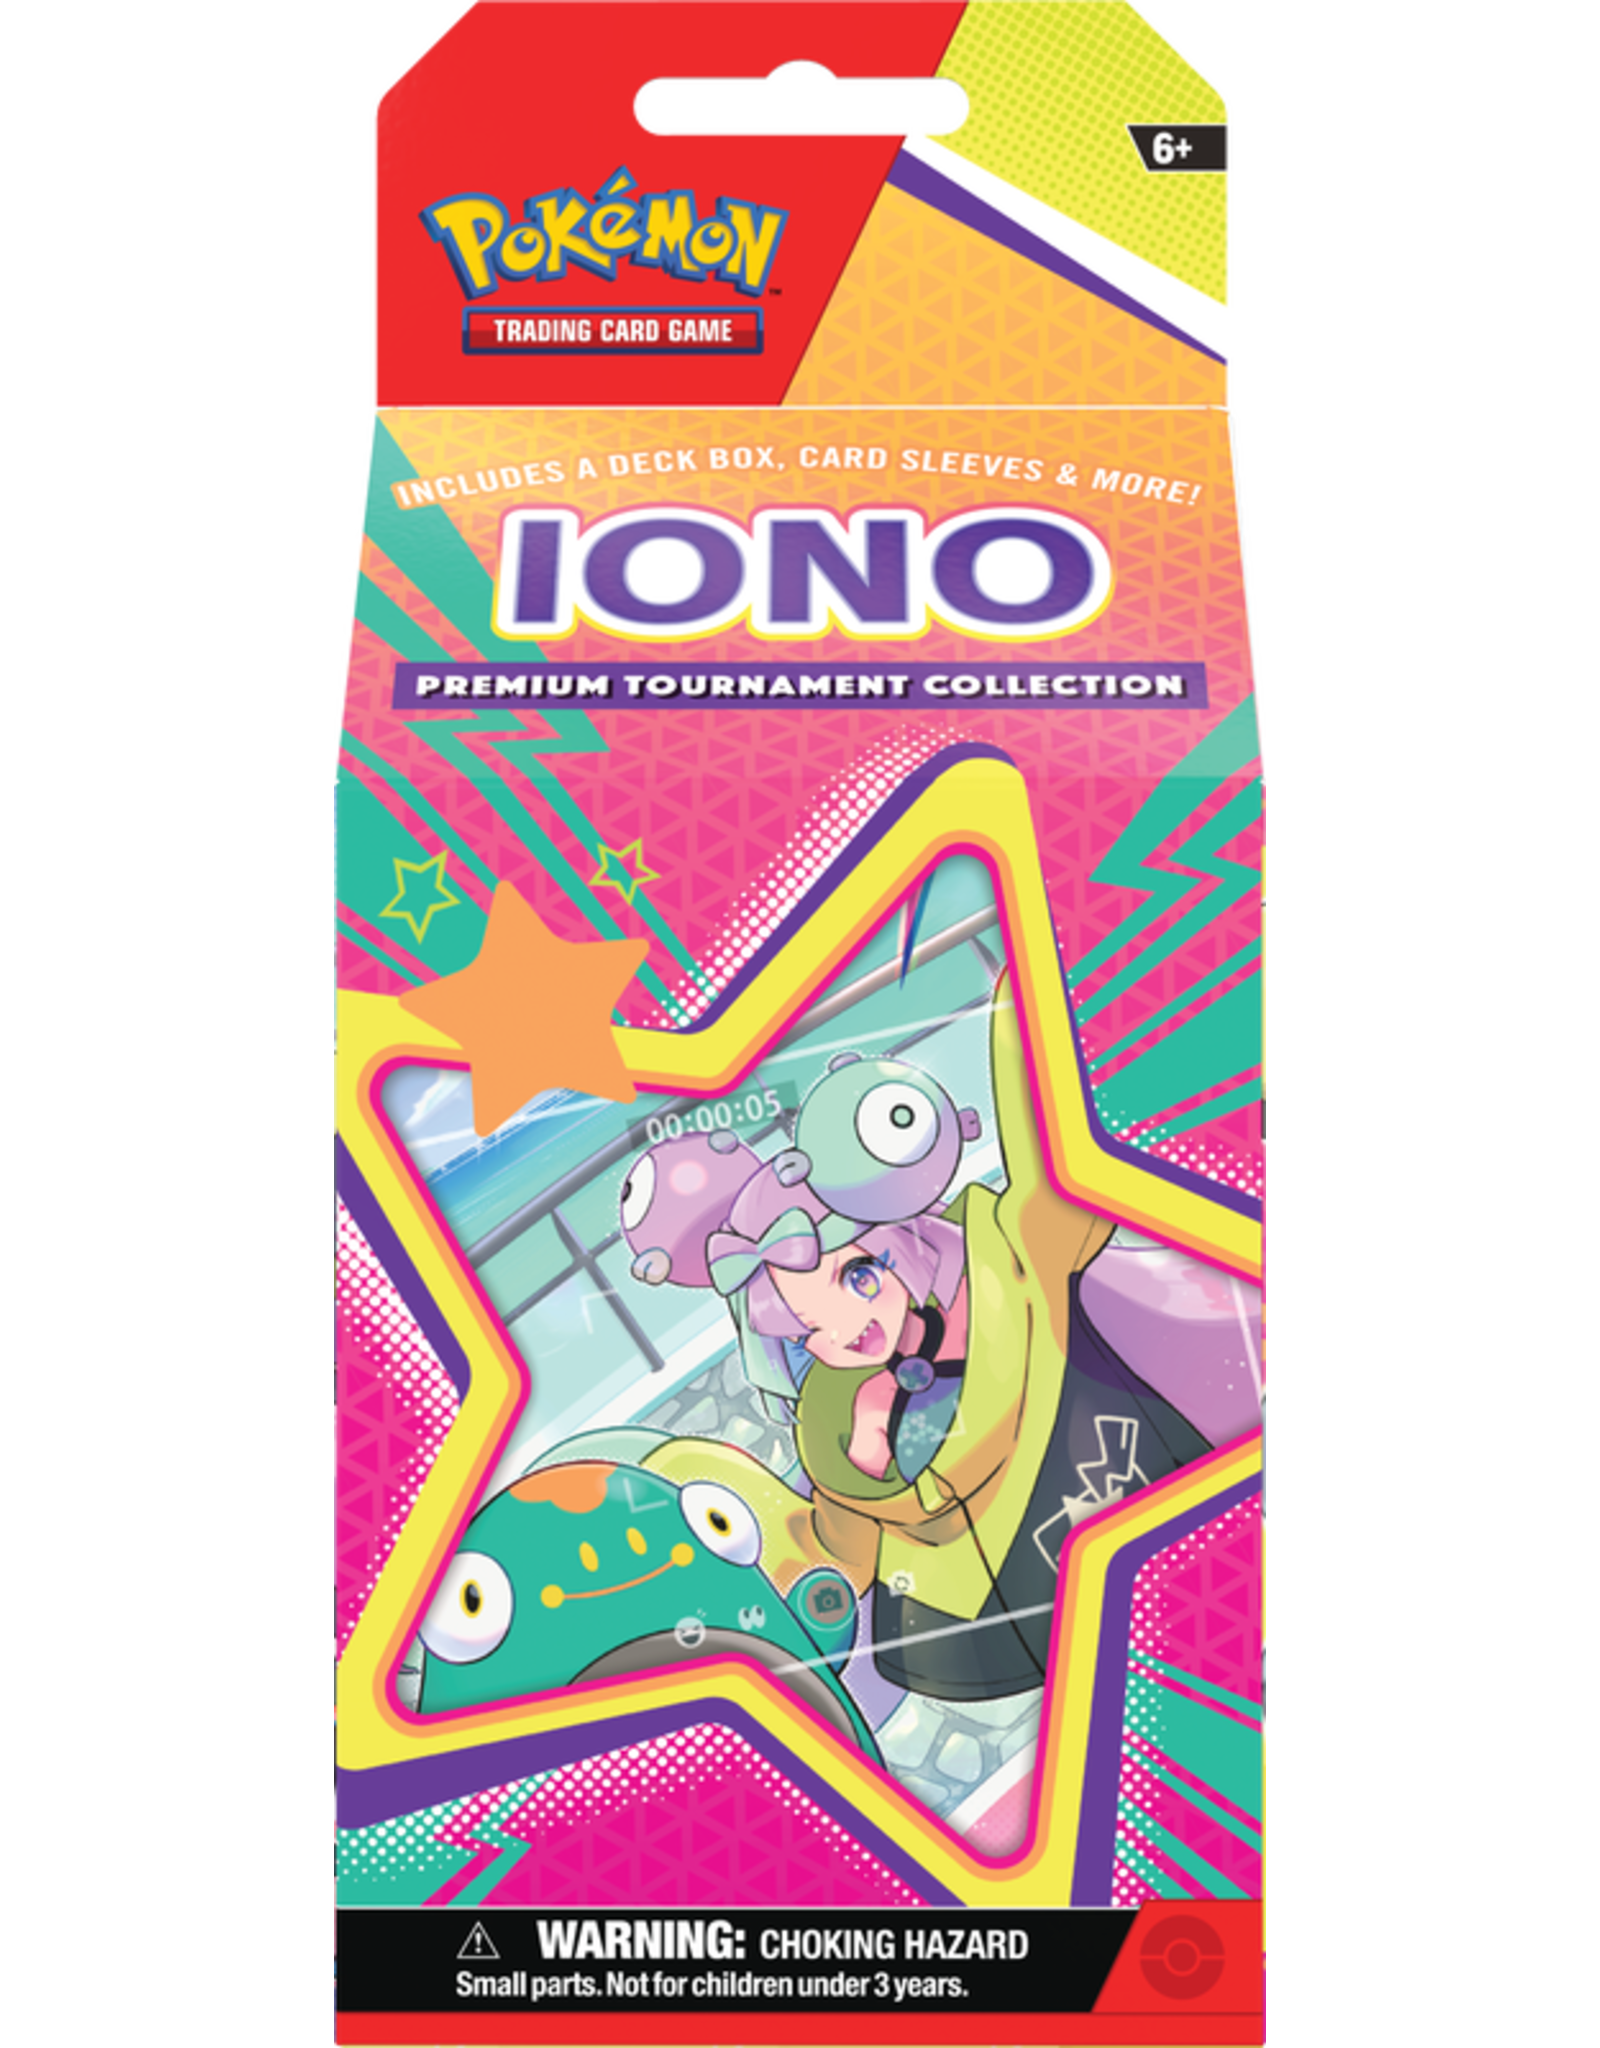 The Pokemon Company Pokémon Trading Card Game - Iono Premium Tournament Collection